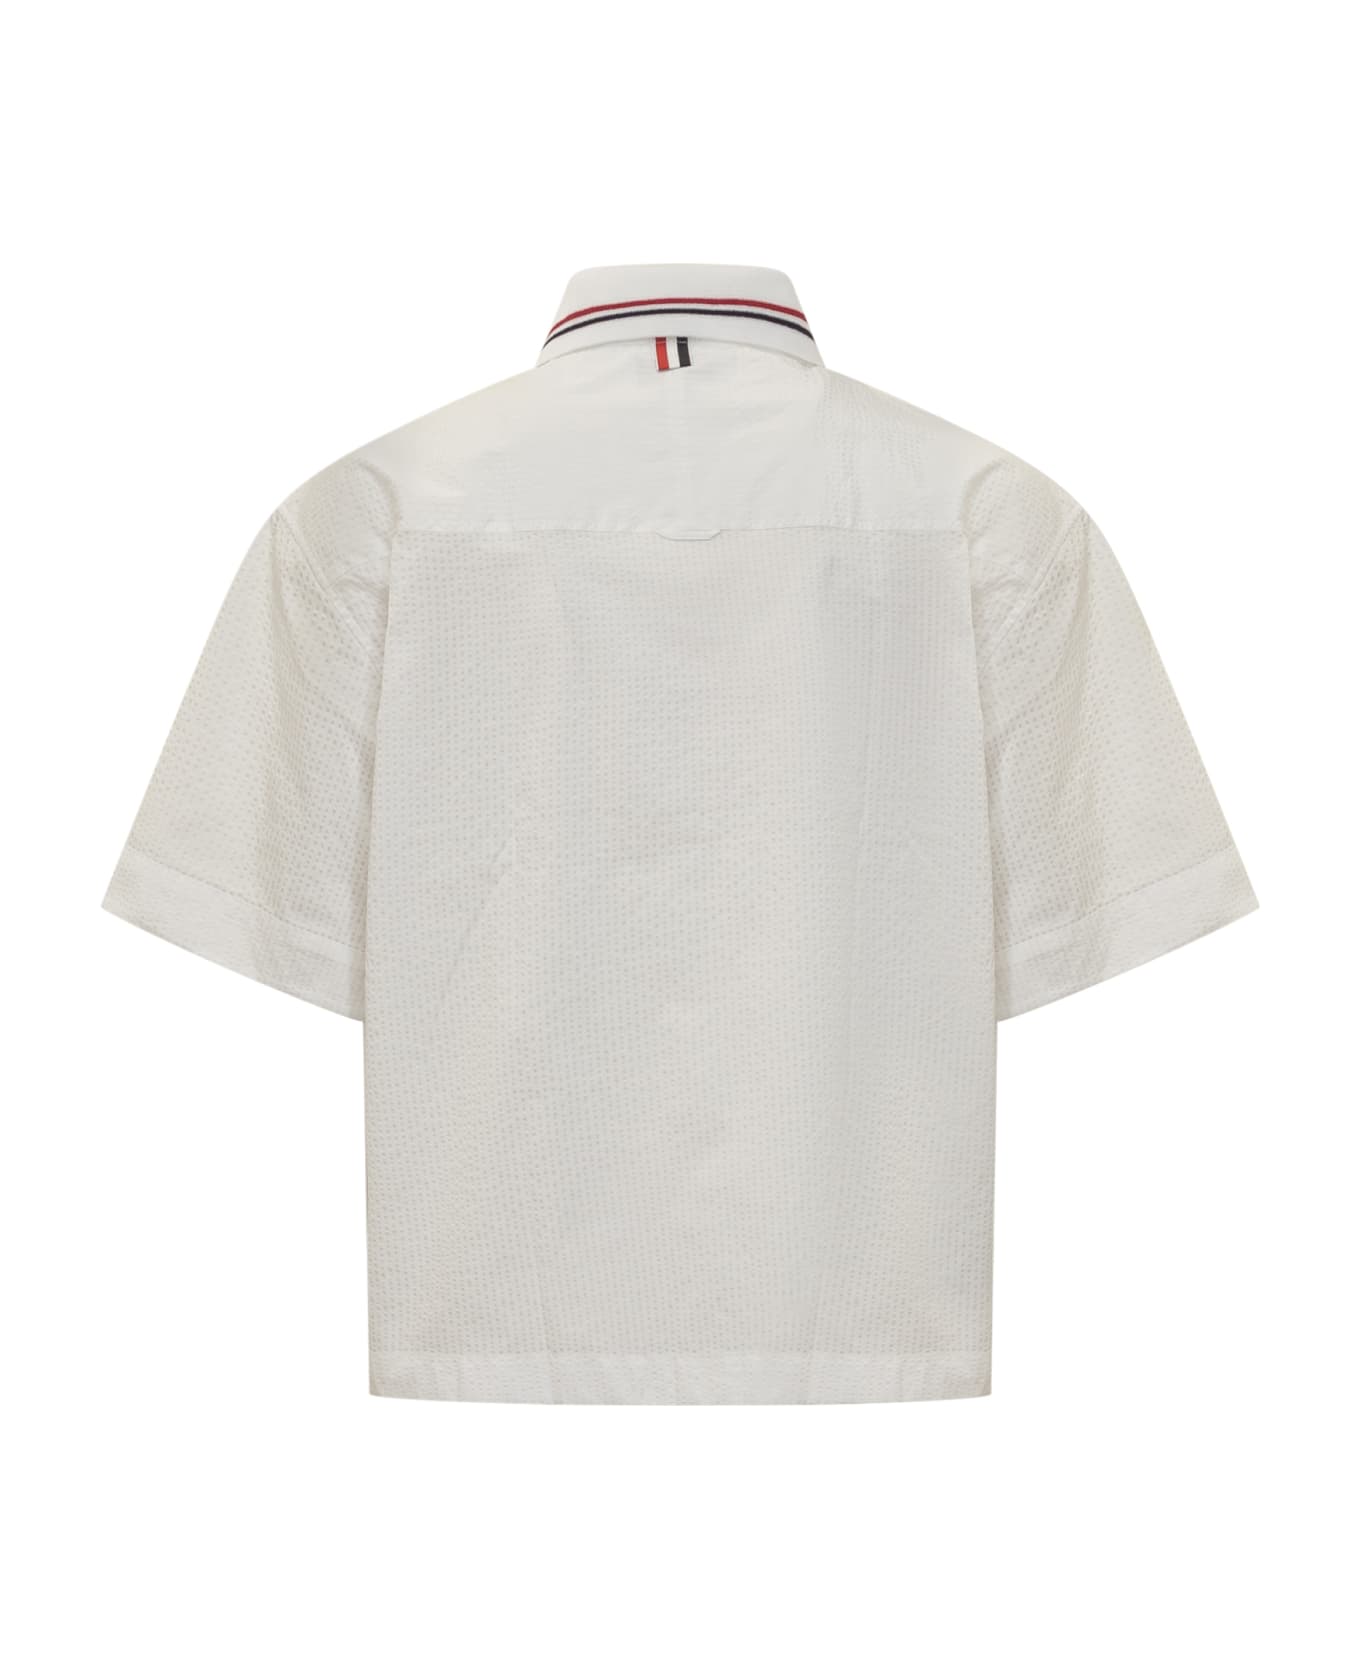 Thom Browne Rugby Shirt - WHITE